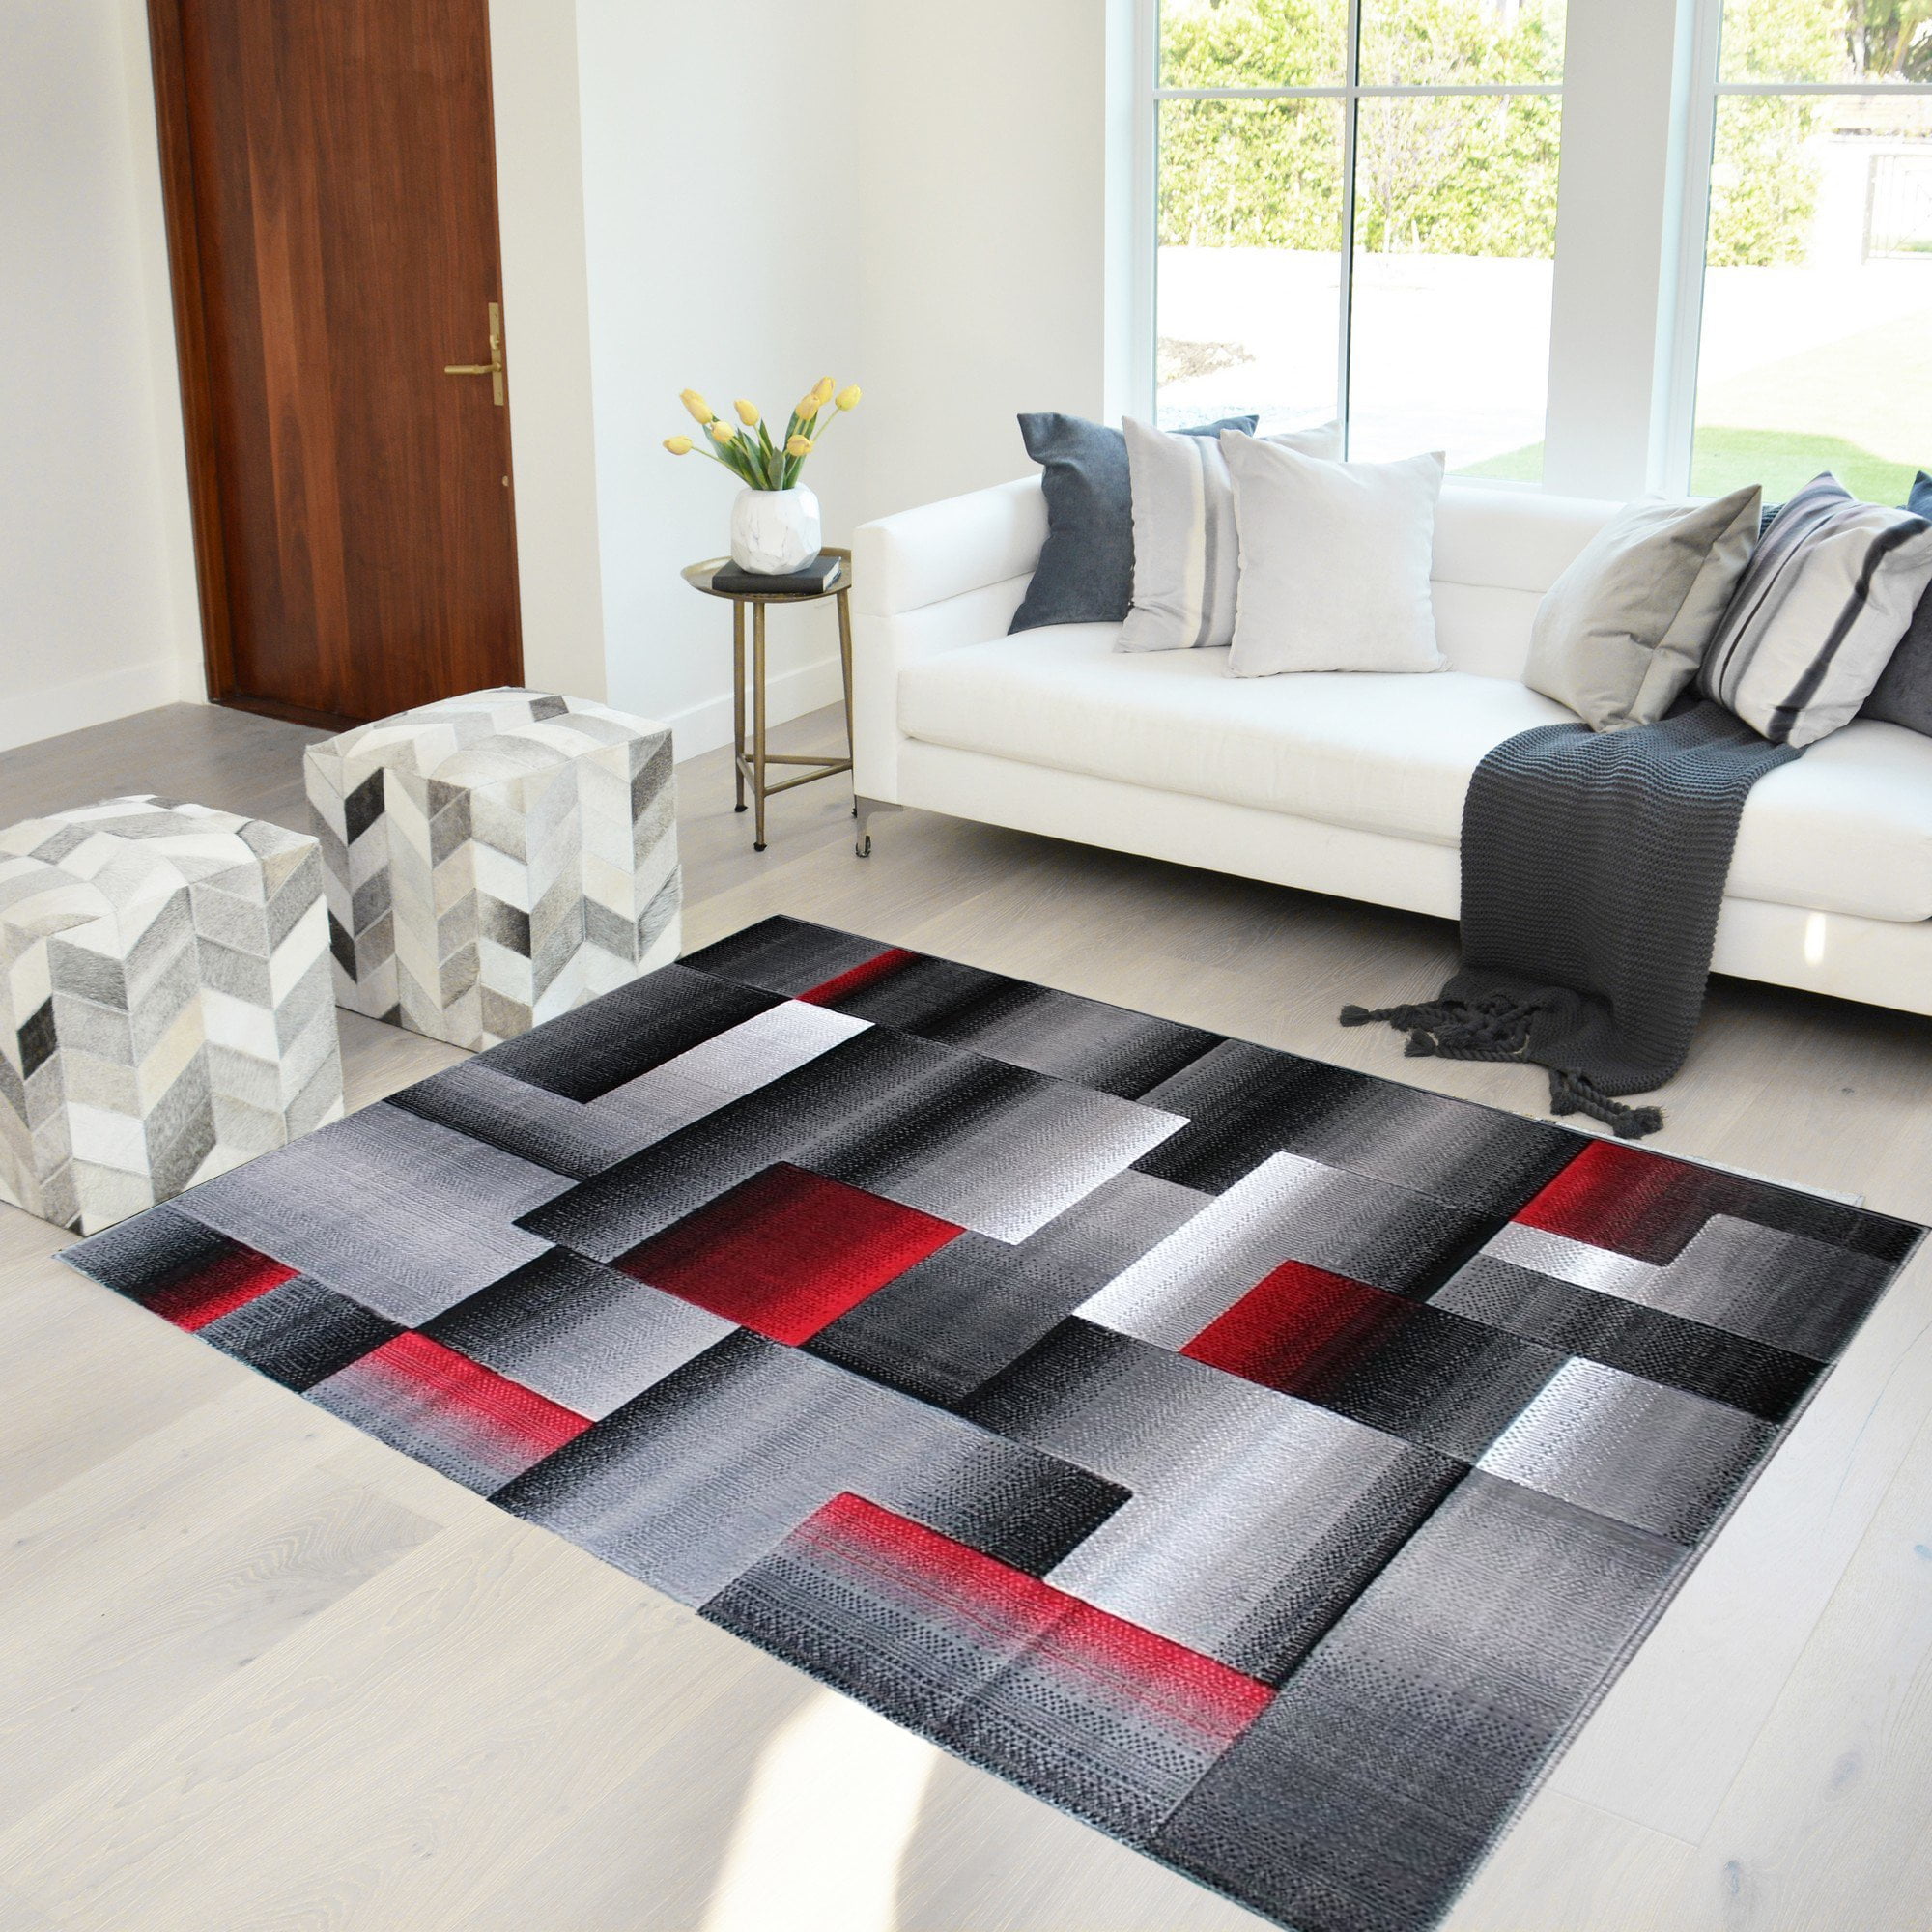 Trendy Living Room Rug Grey Black Red Abstract Design Carpet Hall Bedroom Runner 